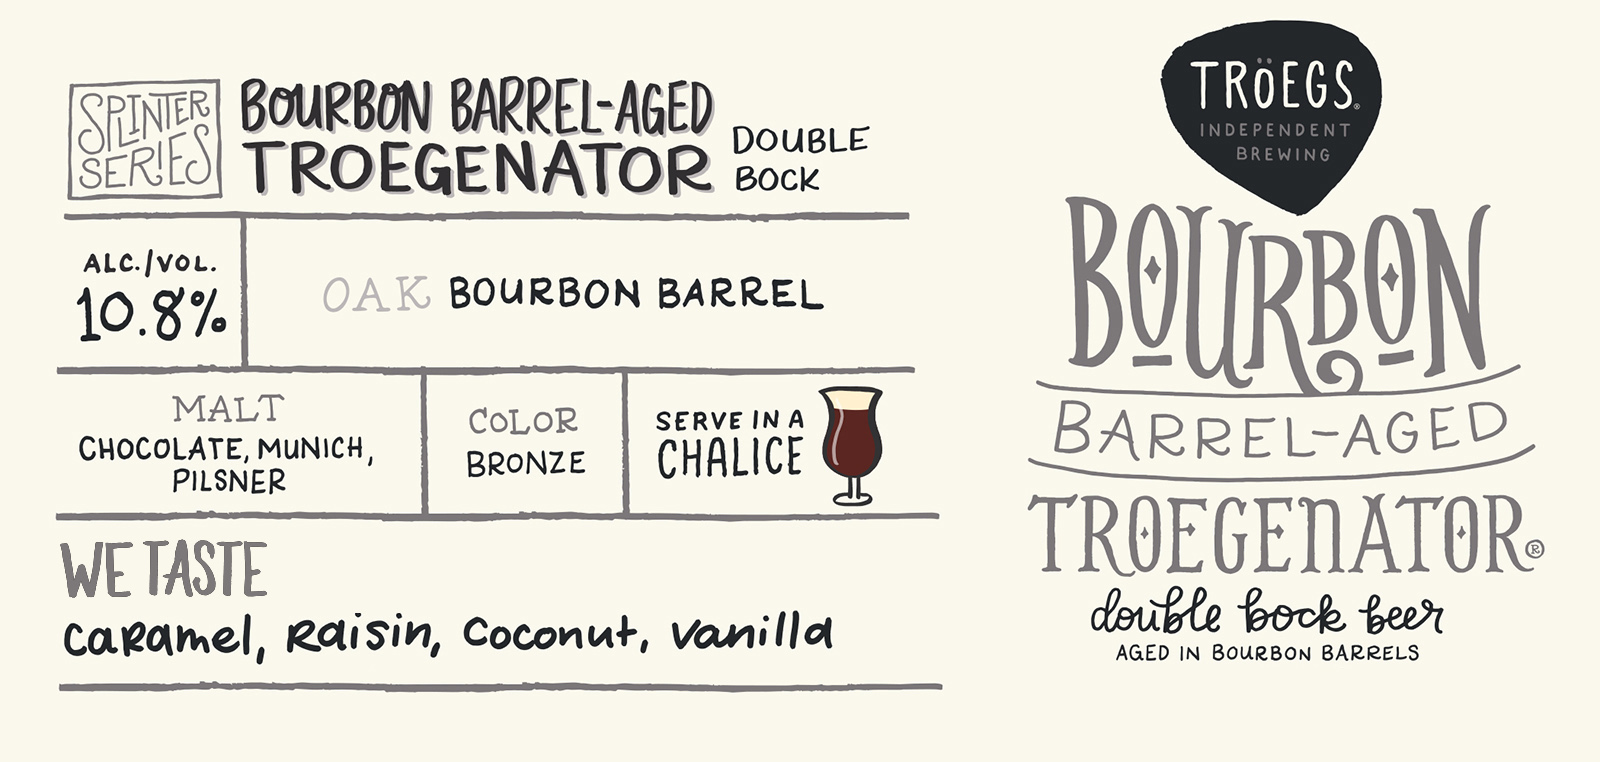 Bourbon Barrel-aged Troegenator info graphic.